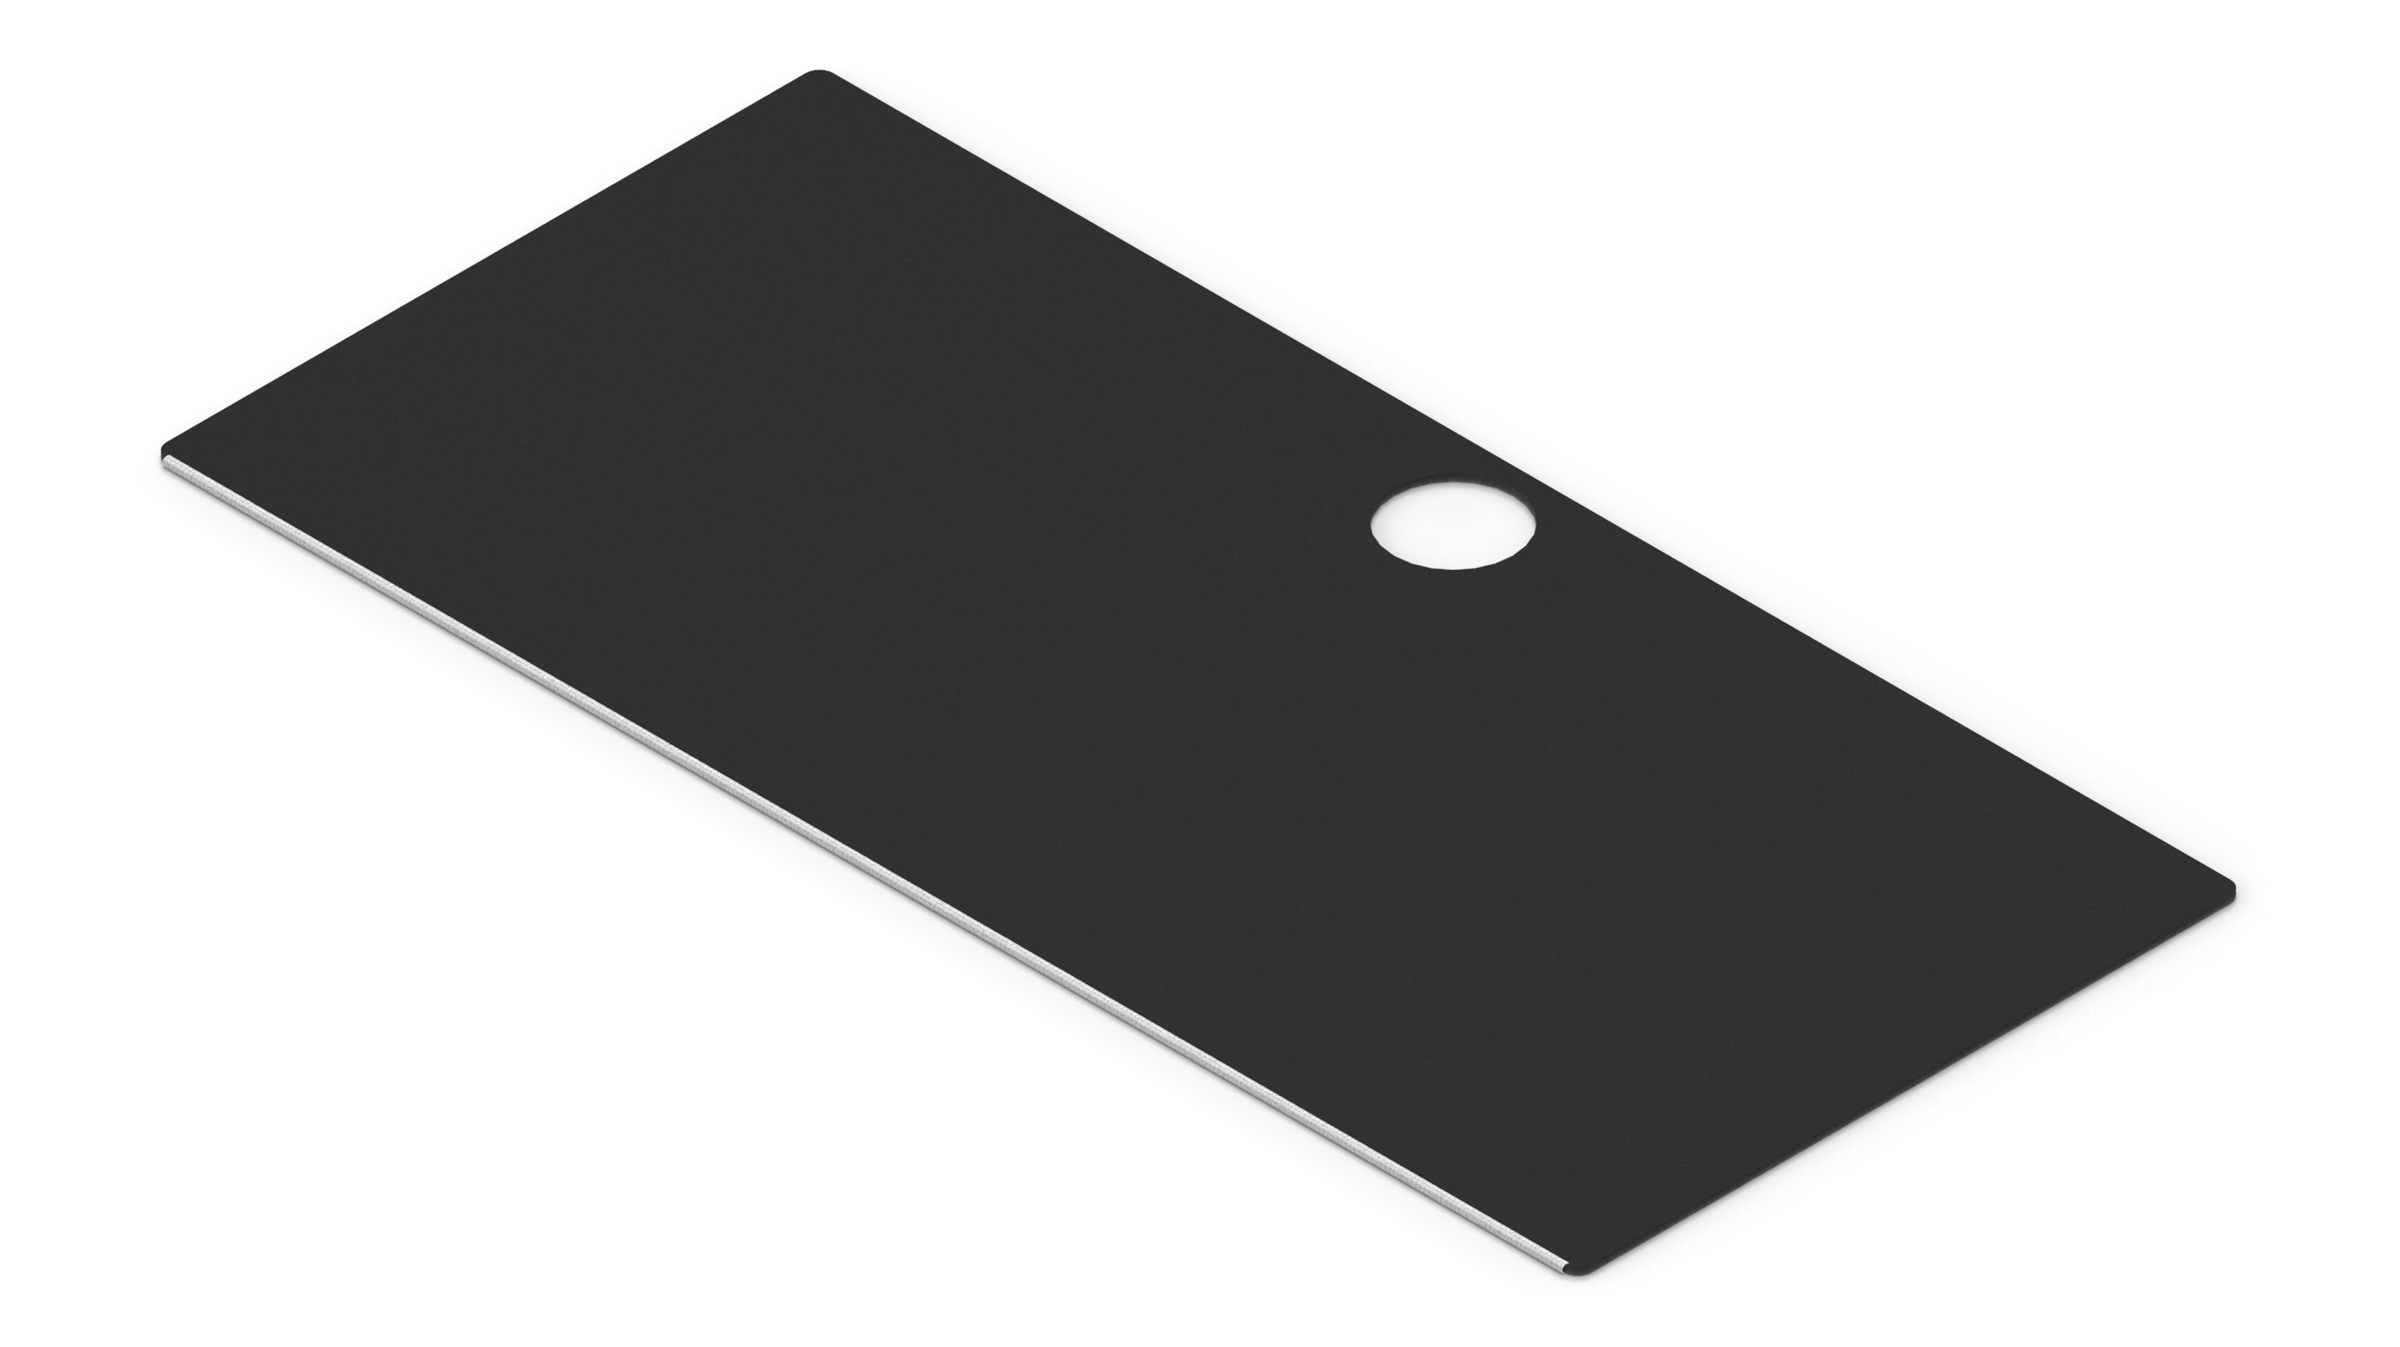 Black w/ White Stitching IKEA MICKE Desk Mat (41" / 105 cm) Full-desk Mouse Pad MKH7UC0JNF |59150|